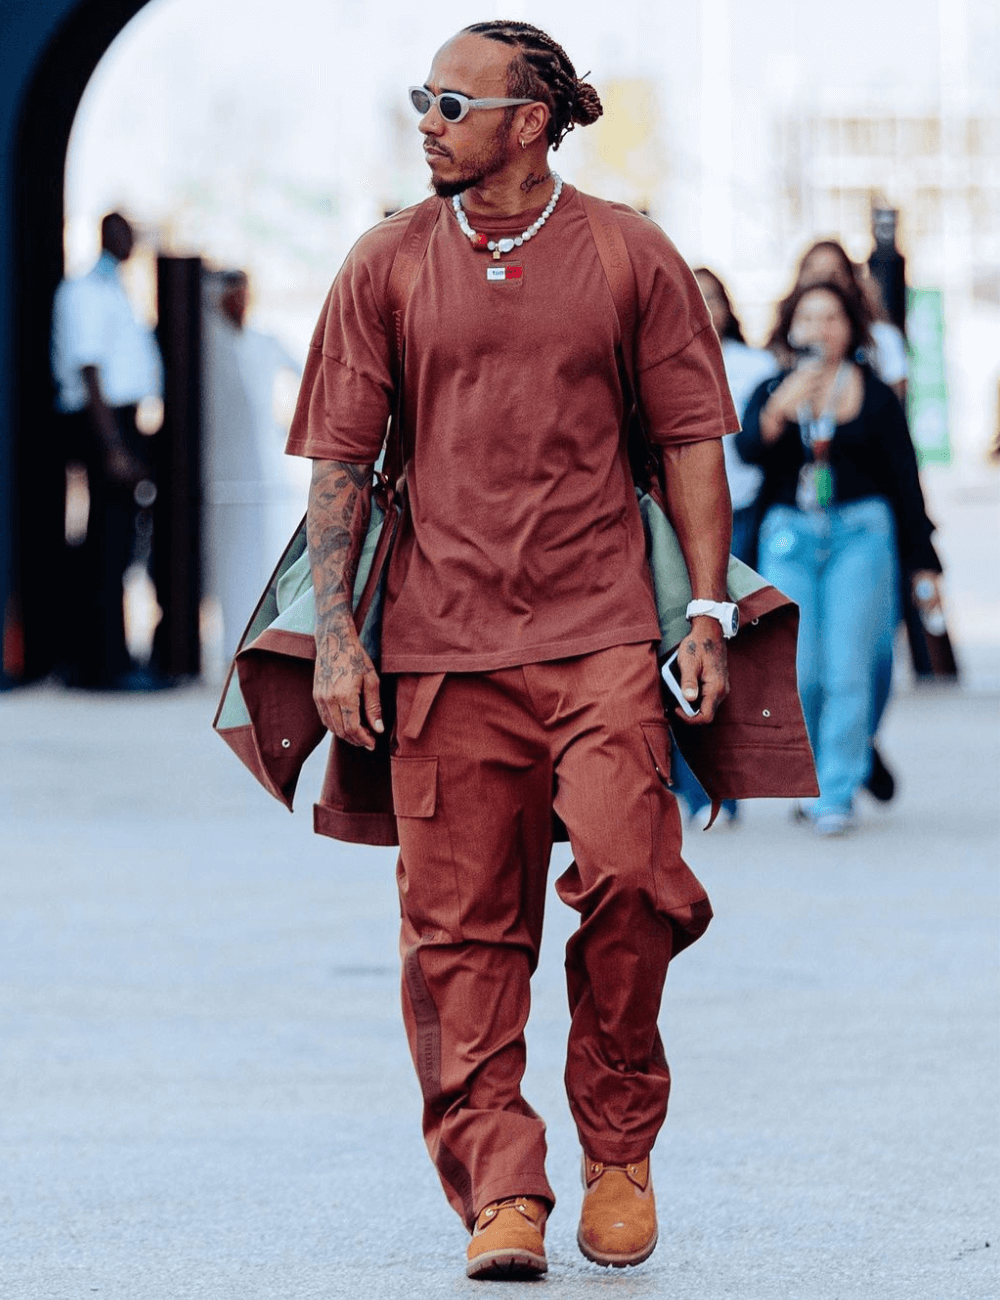 Lewis Hamilton - Look monocromático terracota e óculos de sol  - Lewis Hamilton - verão - homem negro usando óculos de sol andando na rua - https://stealthelook.com.br